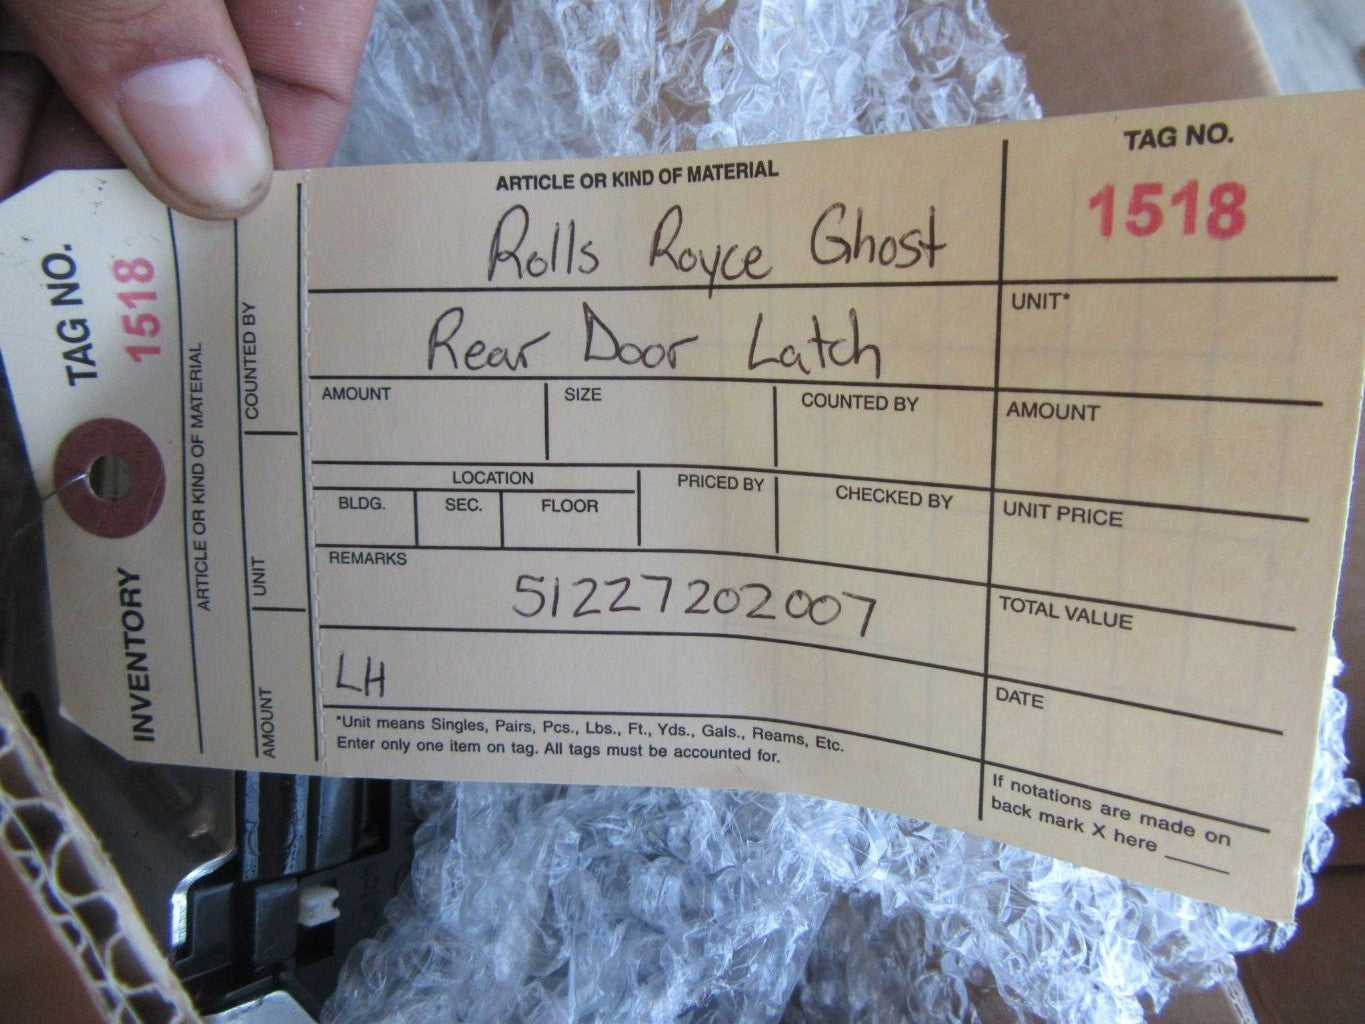 Rolls Royce Ghost left rear door latch #1518